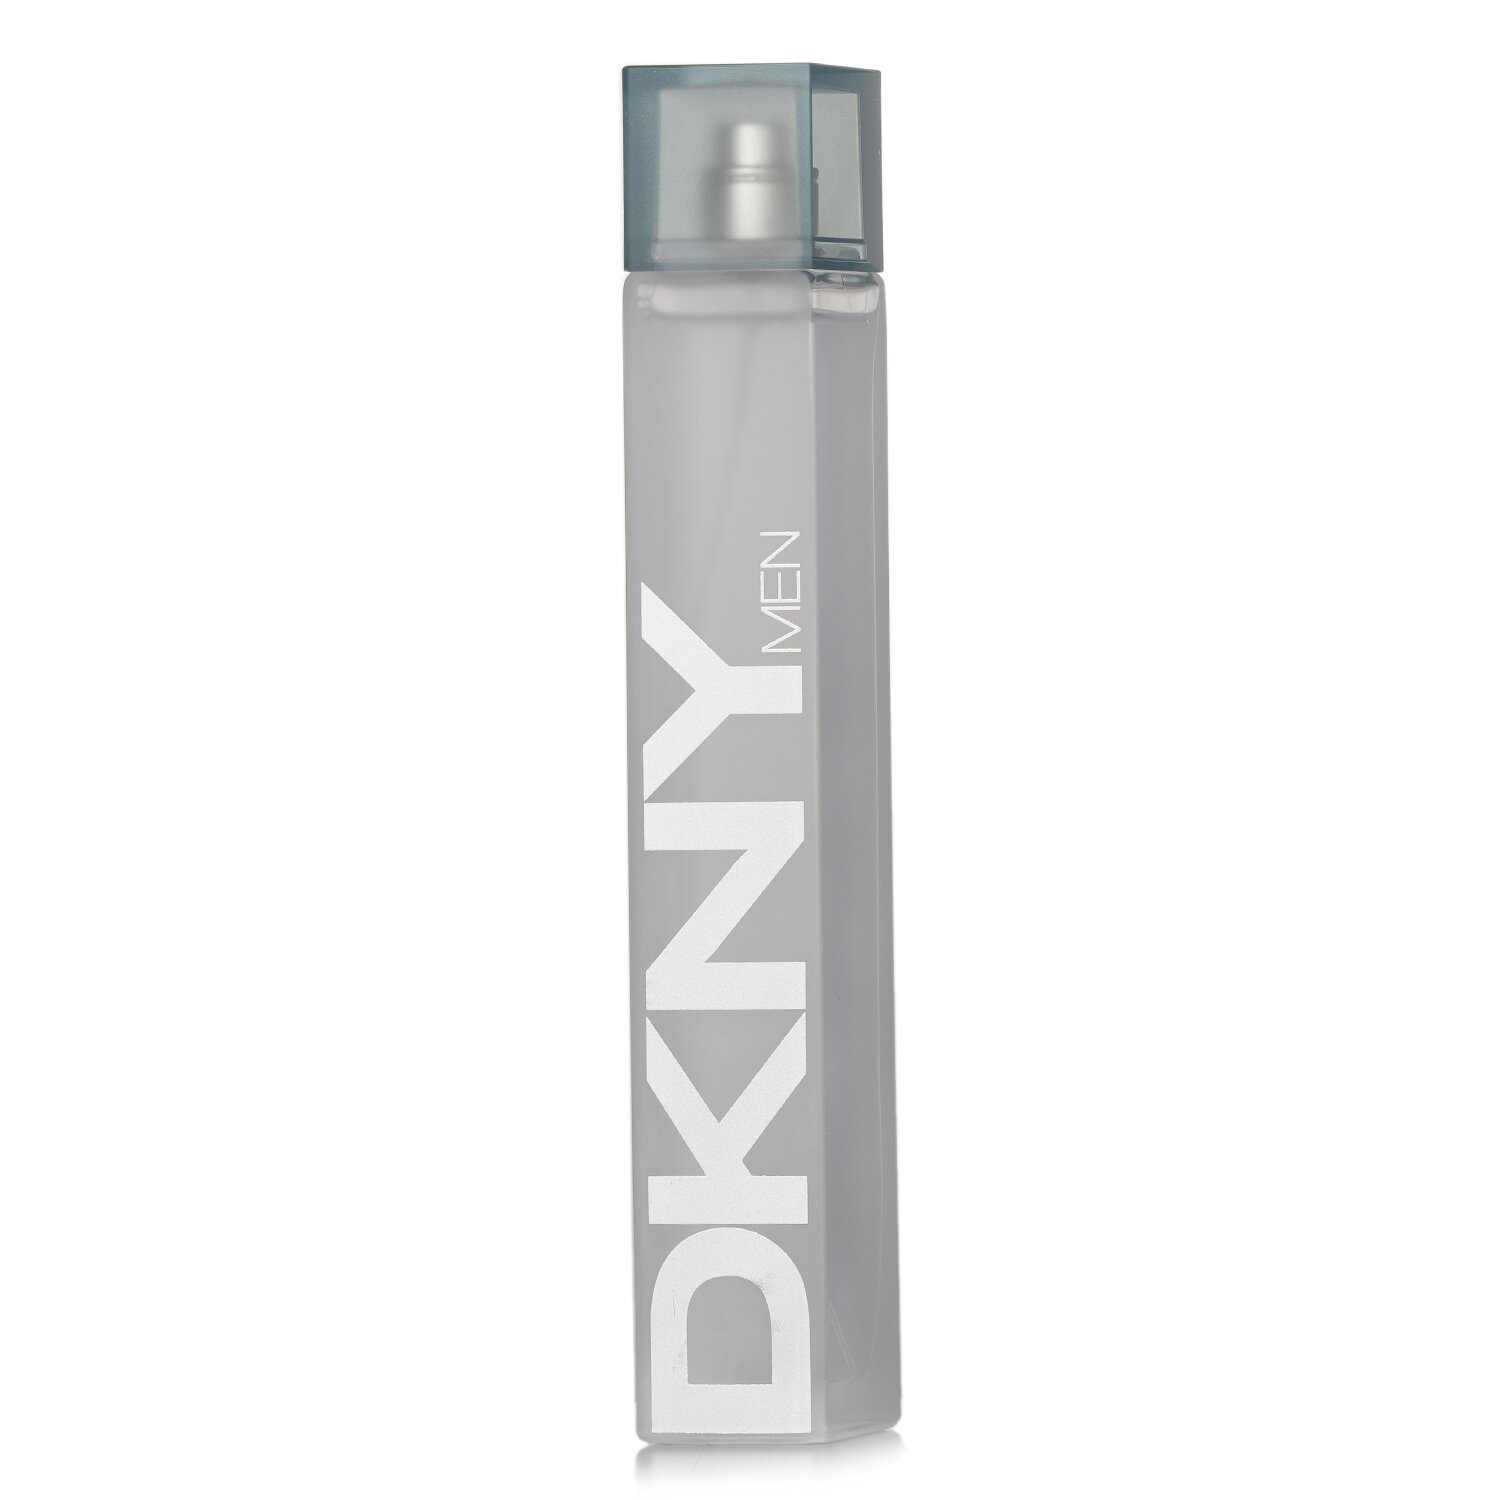 DKNY Energizing Eau De Toilette Spray 100ml/3.4oz